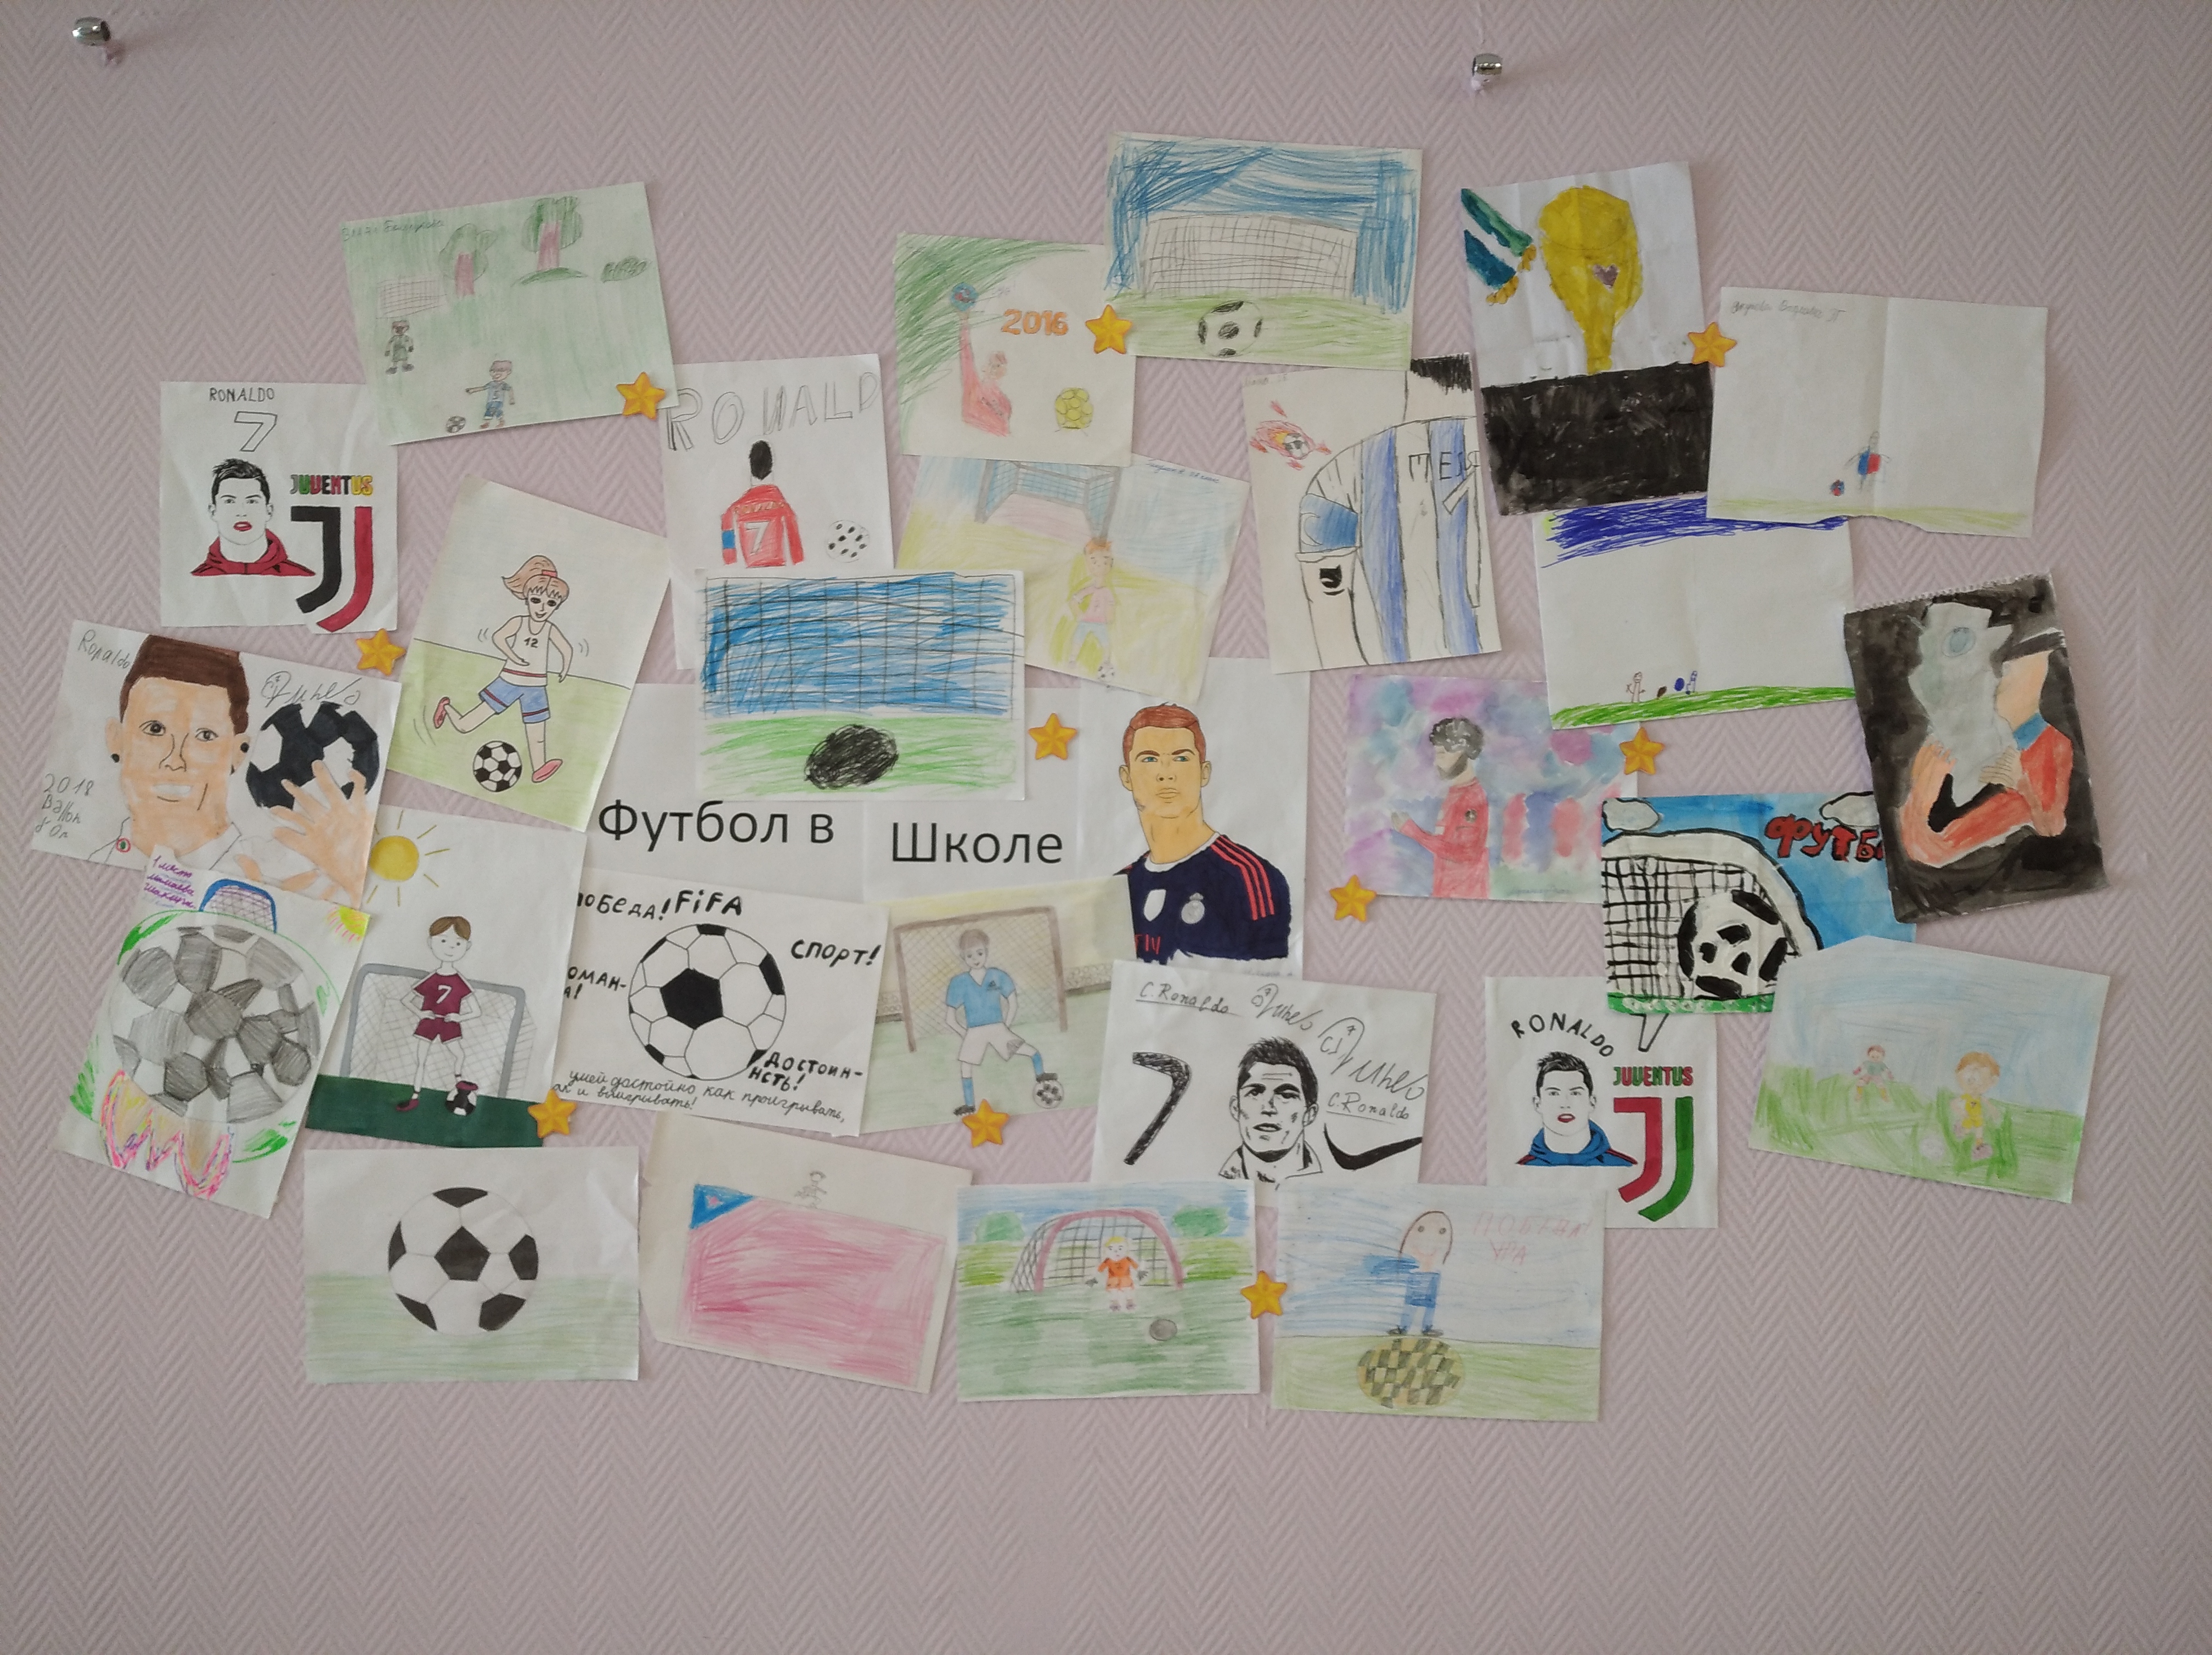 Конкурс рисунков на тему «Футбол в школе».